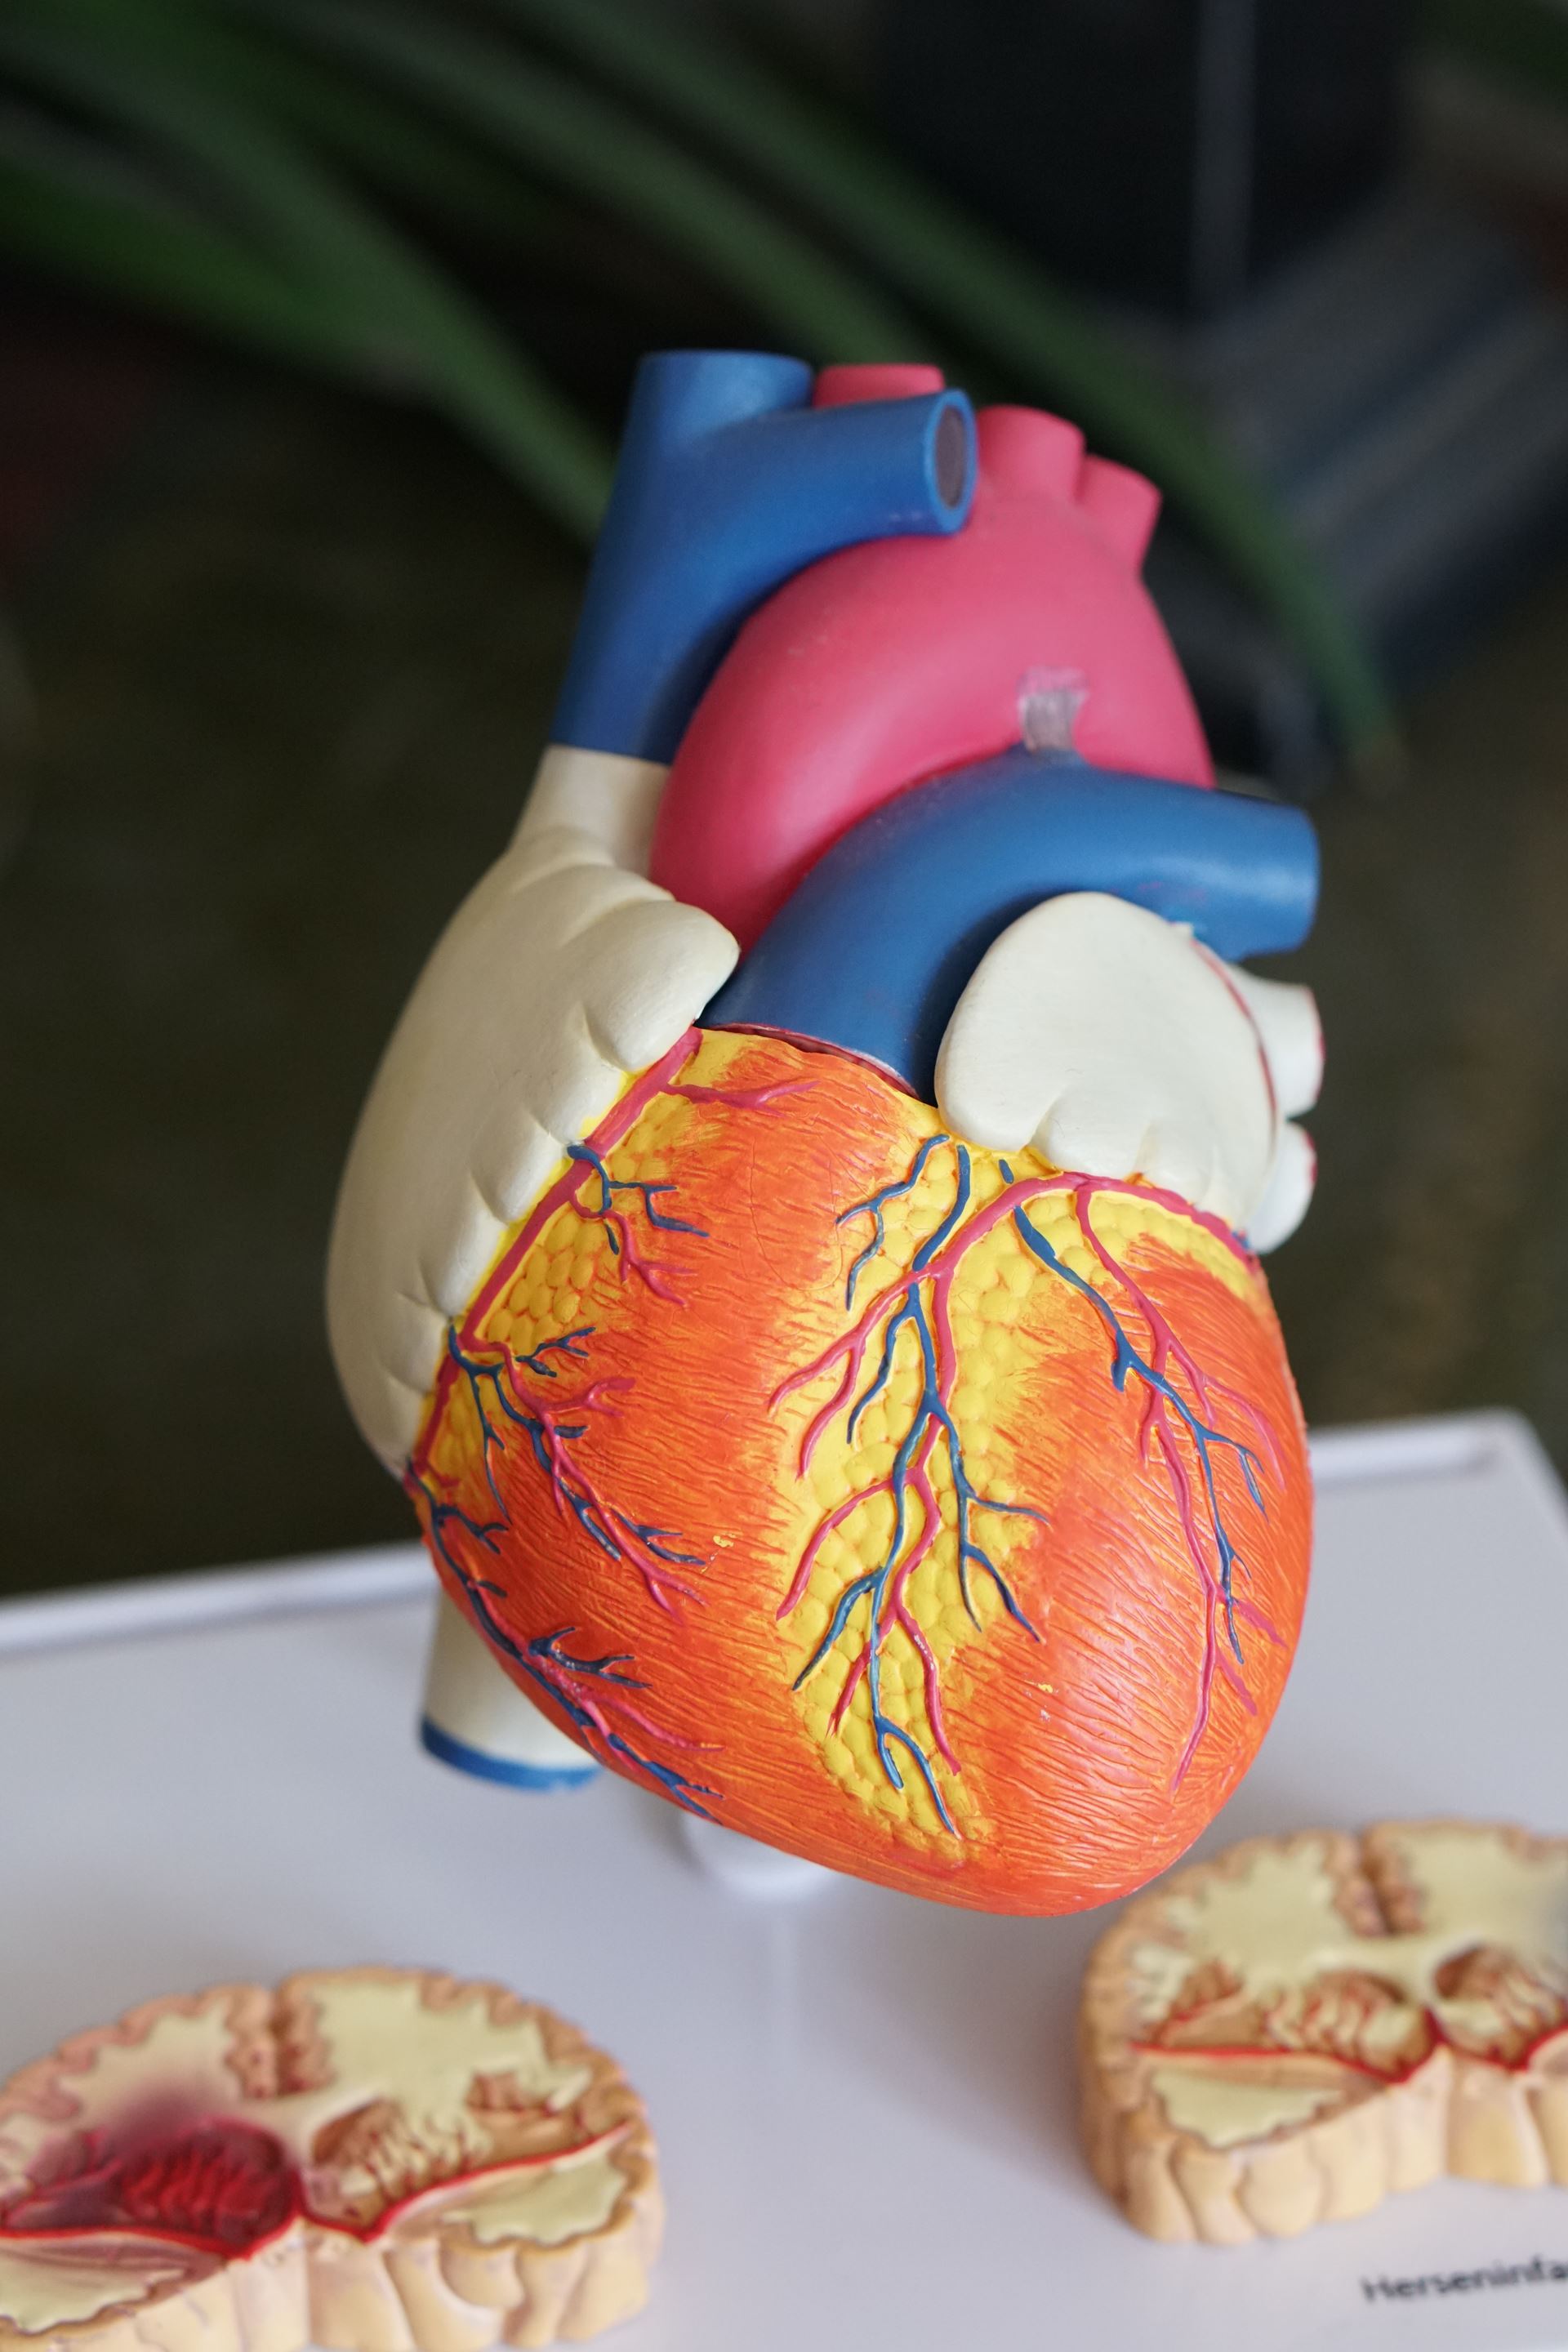 Chronic Heart Disease (CHD) and Healthy Heart